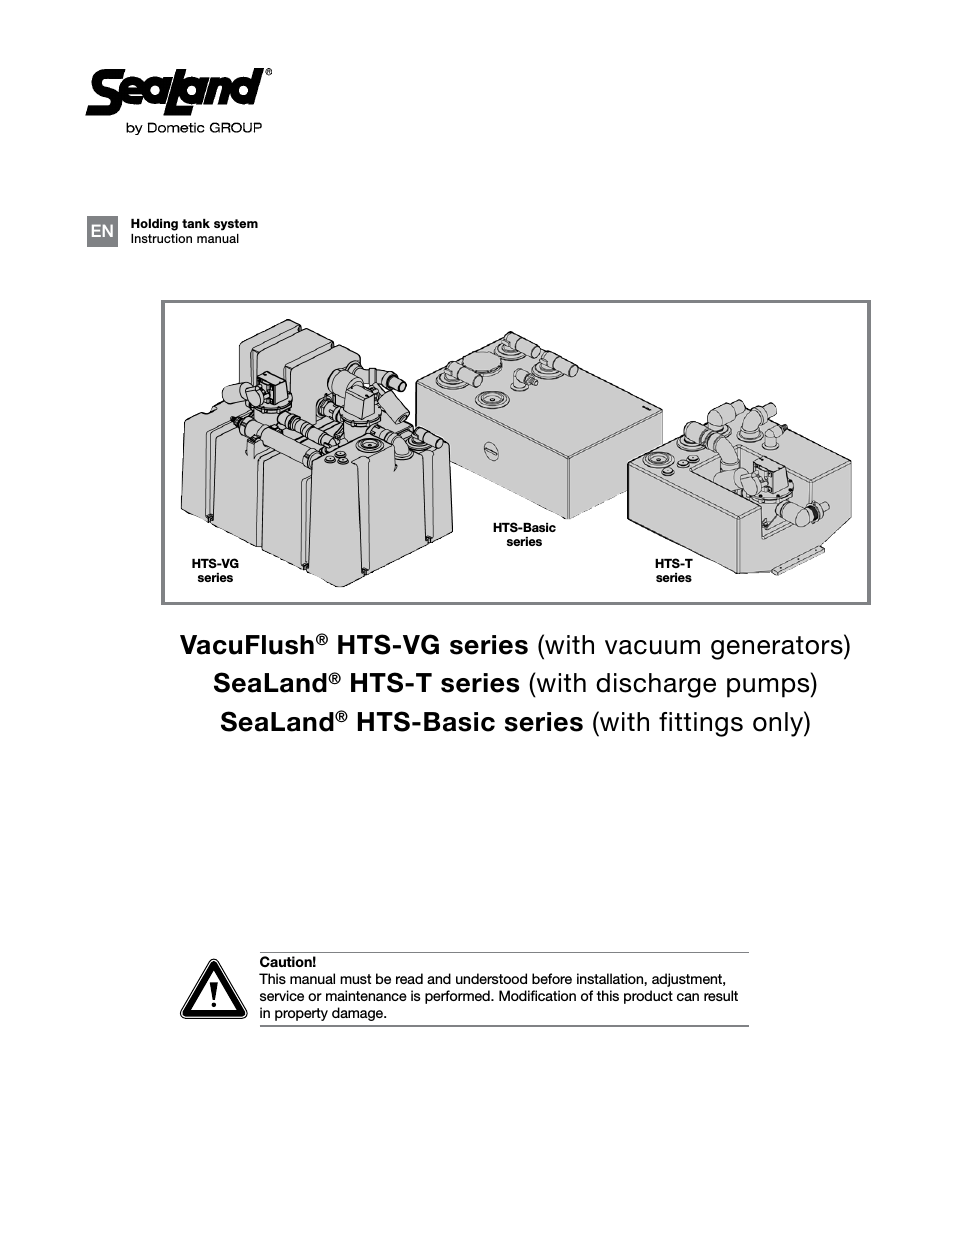 VacuFlush HTS-VG series (with vacuum generators)